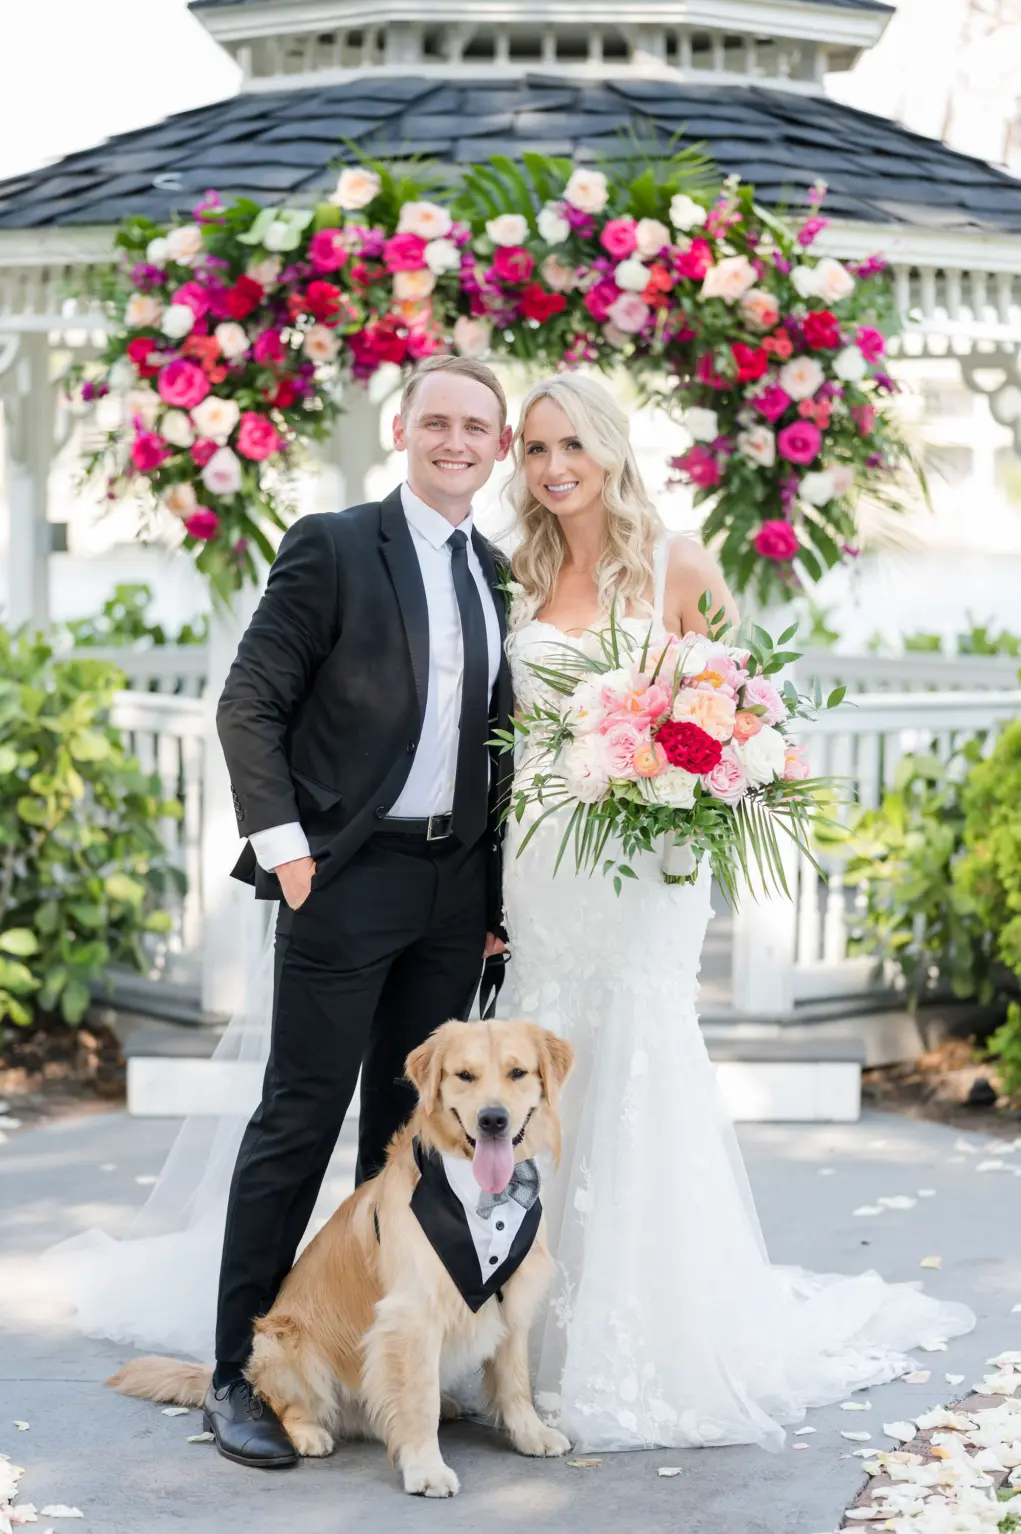 Bride and Groom with Dog Wearing Wedding Tuxedo Bandana | Tropical Pink and White Wedding Ceremony Gazebo Altar Decor Inspiration